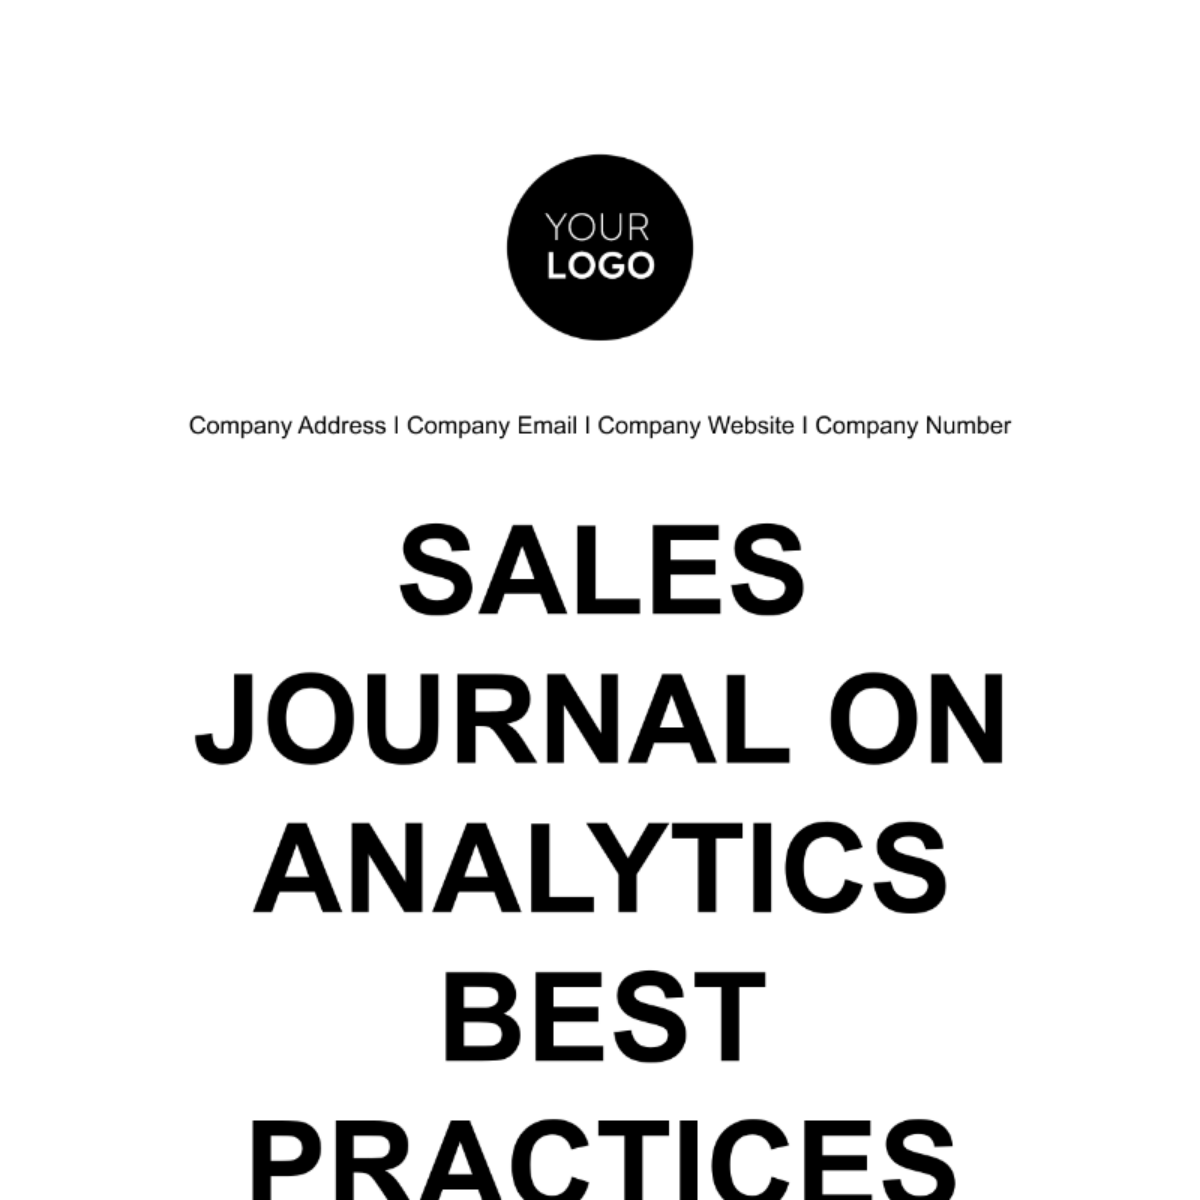 Sales Journal on Analytics Best Practices Template